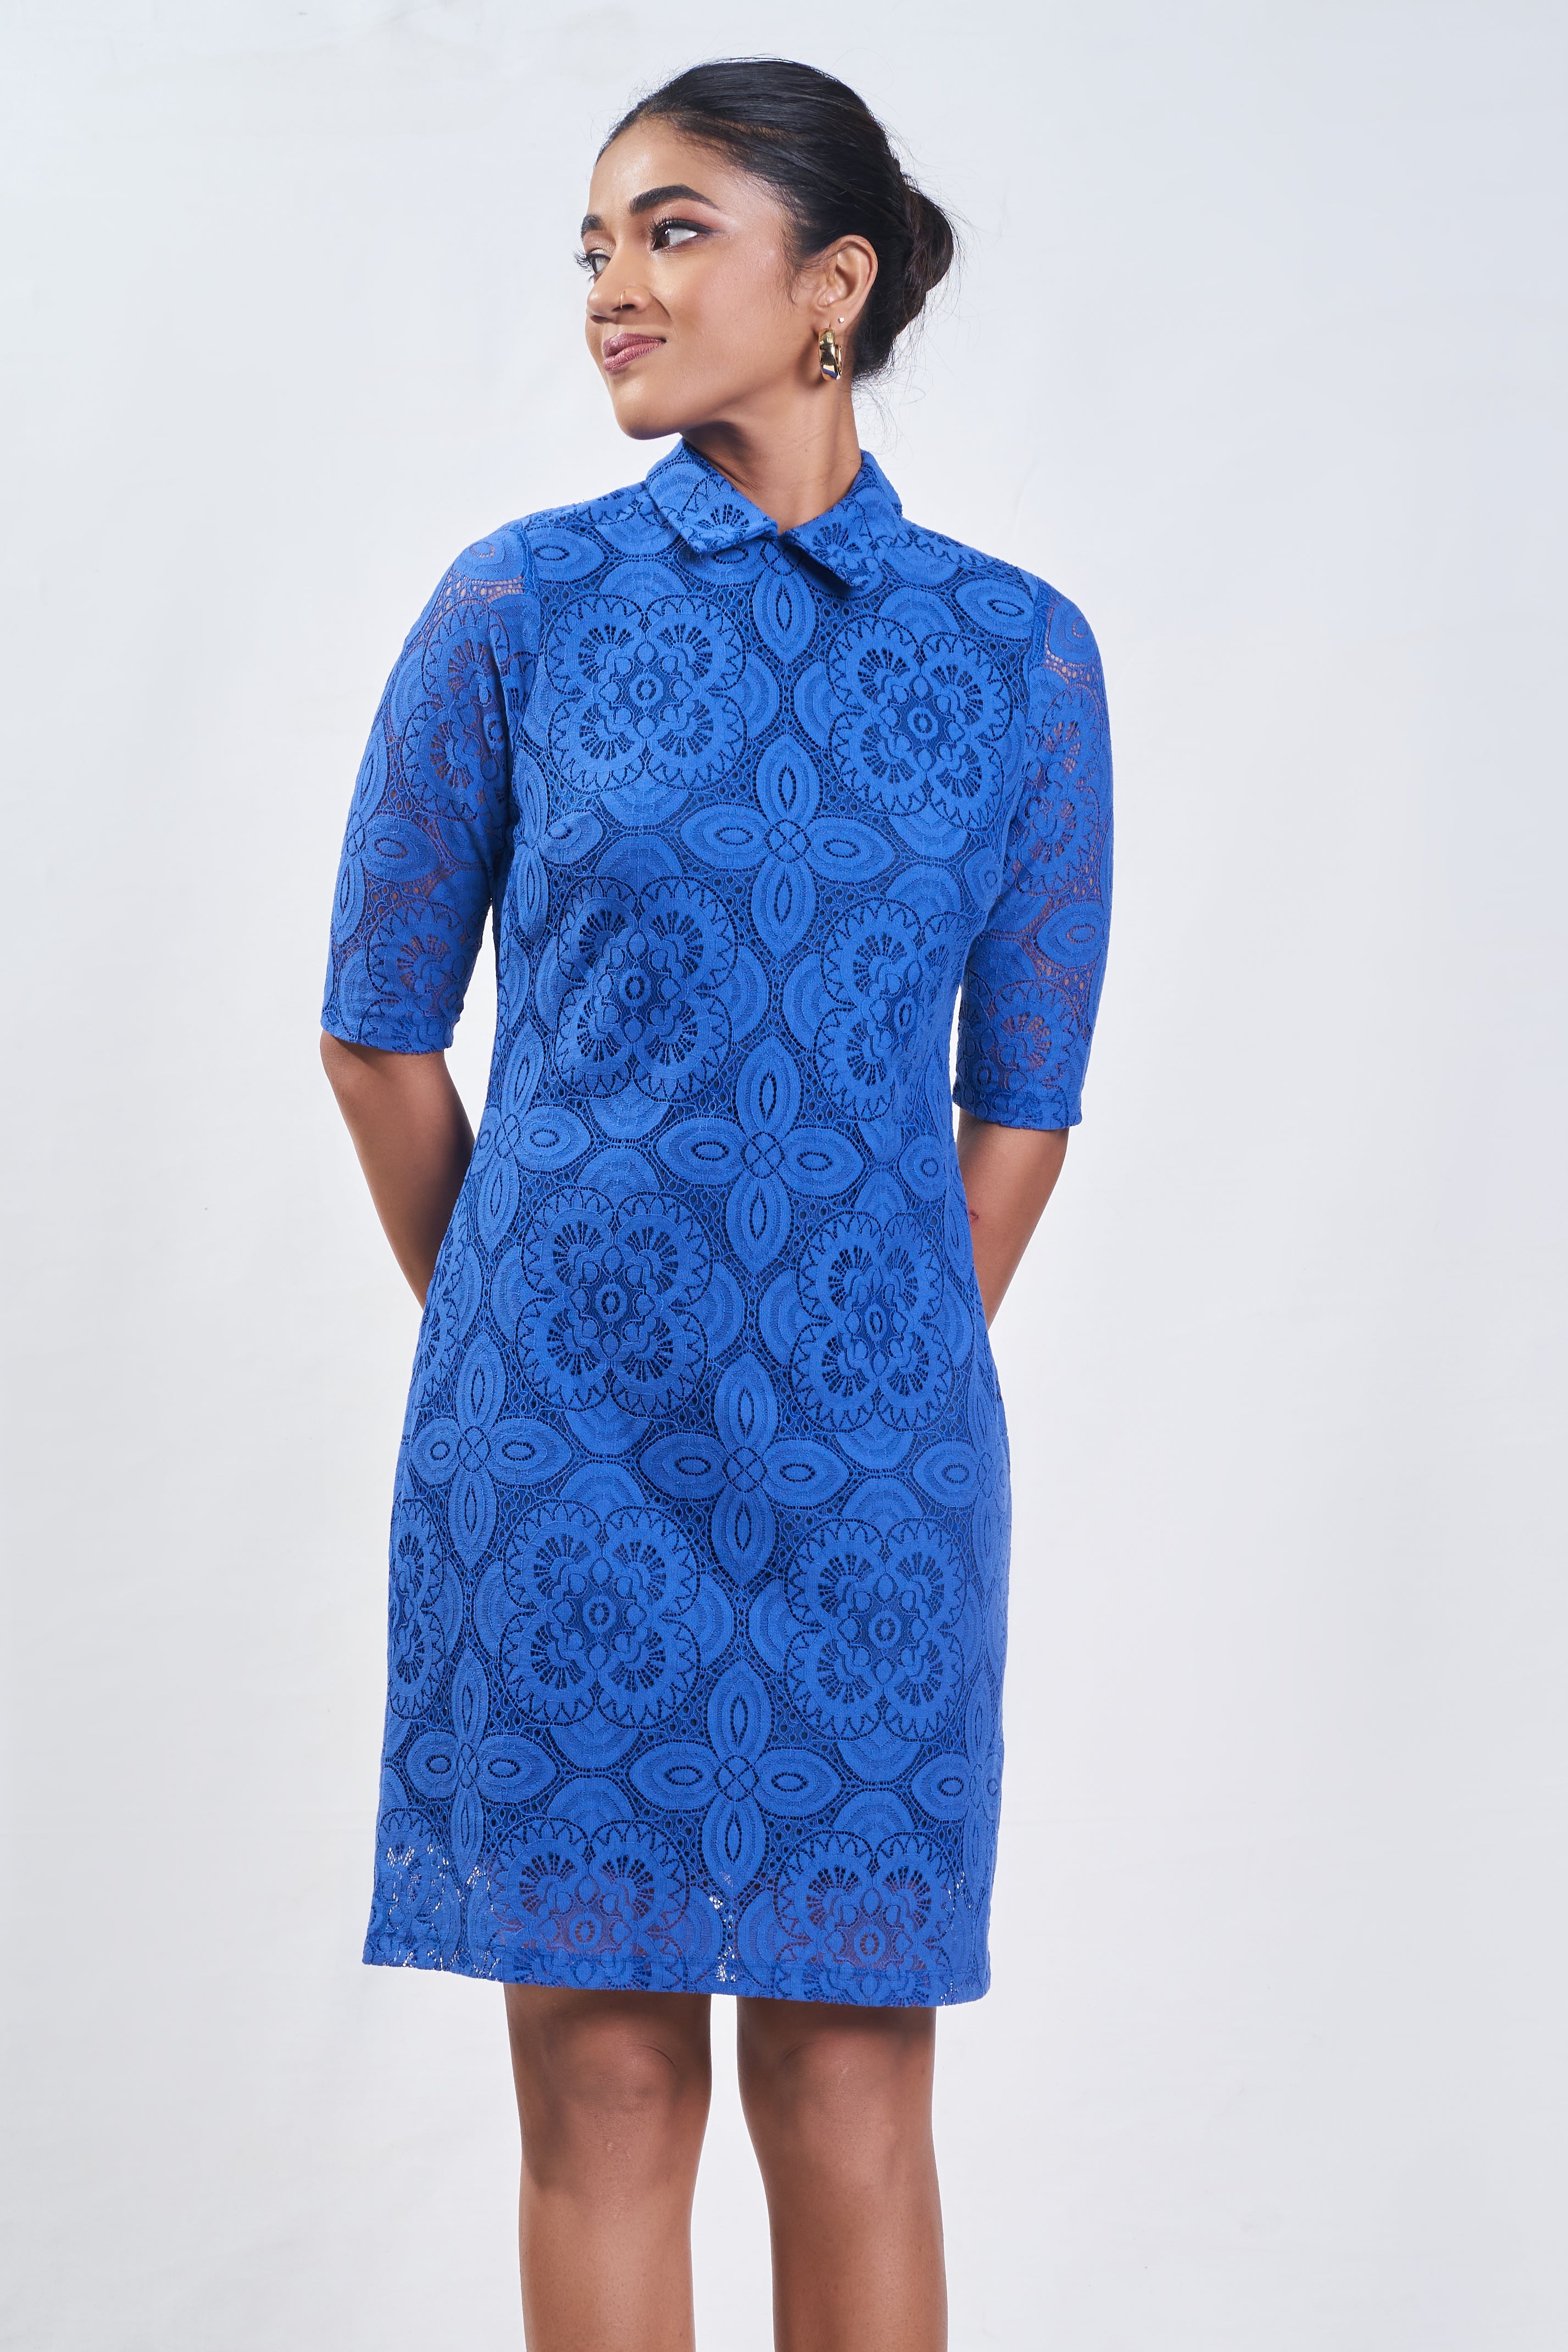 Trendy collared lace dress - Avirate Sri Lanka